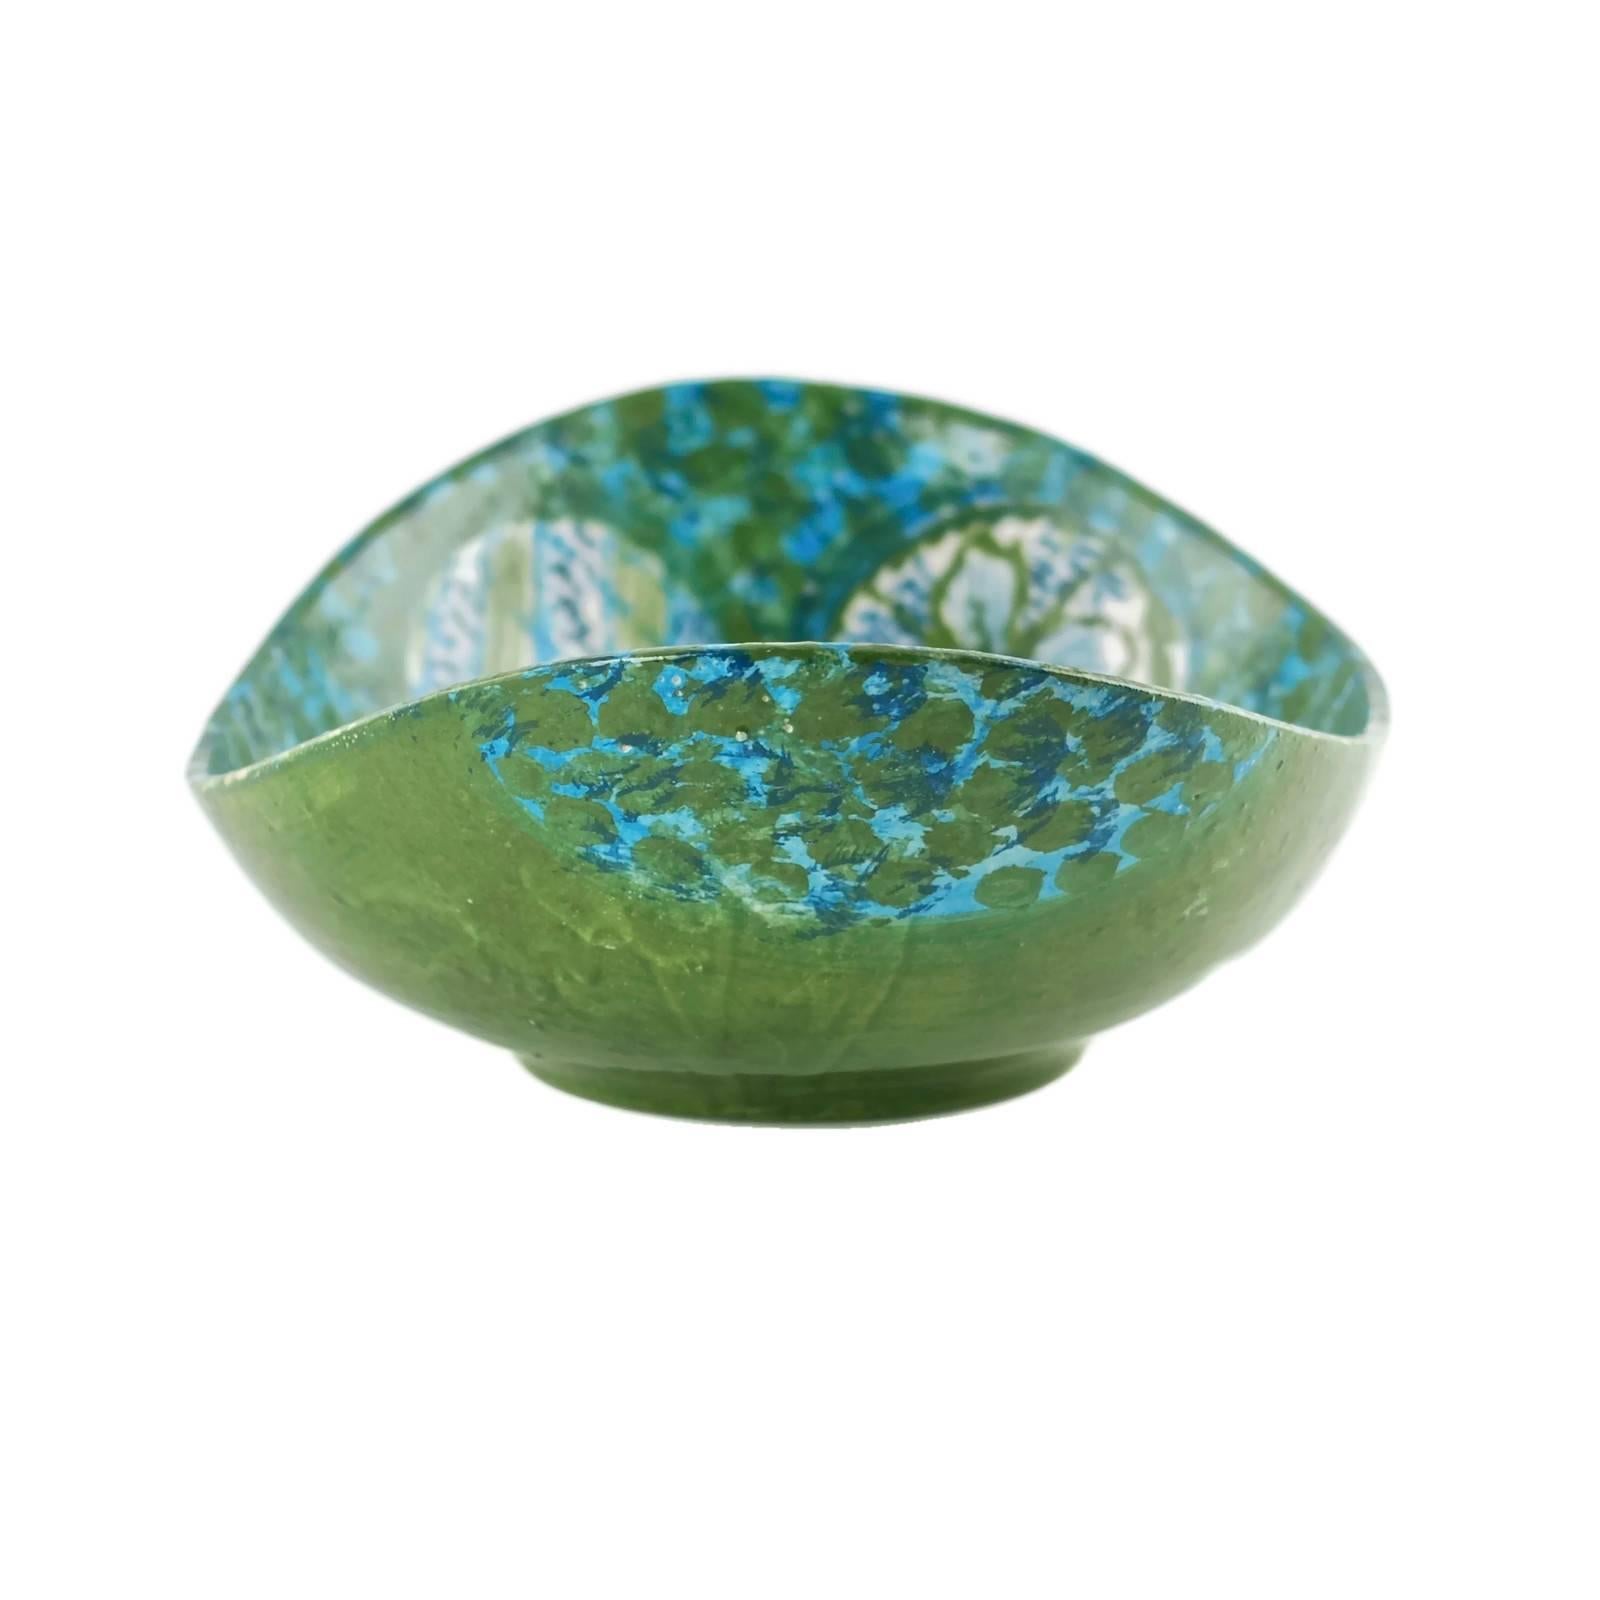 20th Century Midcentury Raymor Hand-Painted Italian Ceramic Centerpiece Bowl For Sale